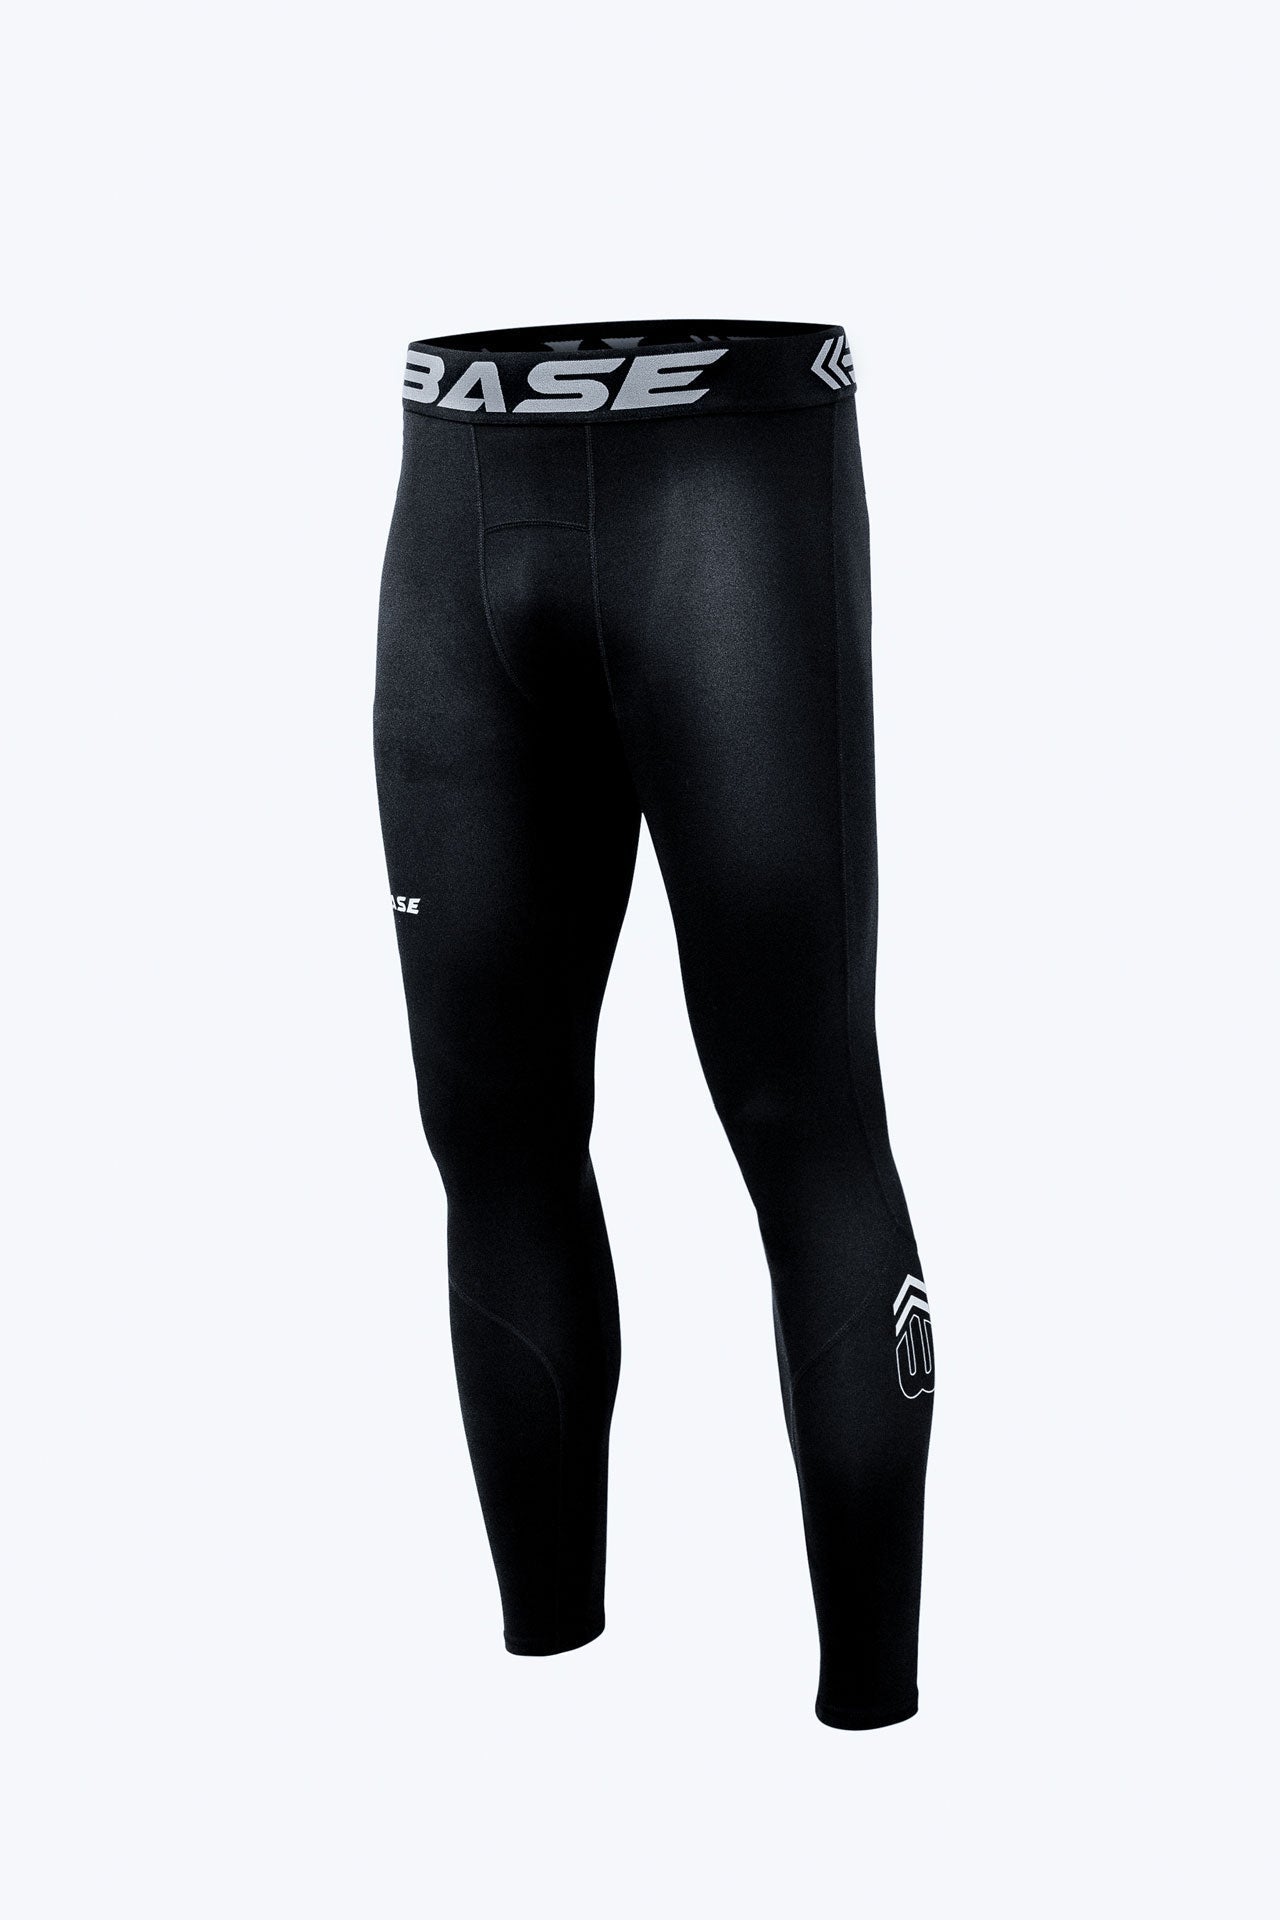 BASE Tights BASE Men's Performance Tights - Black